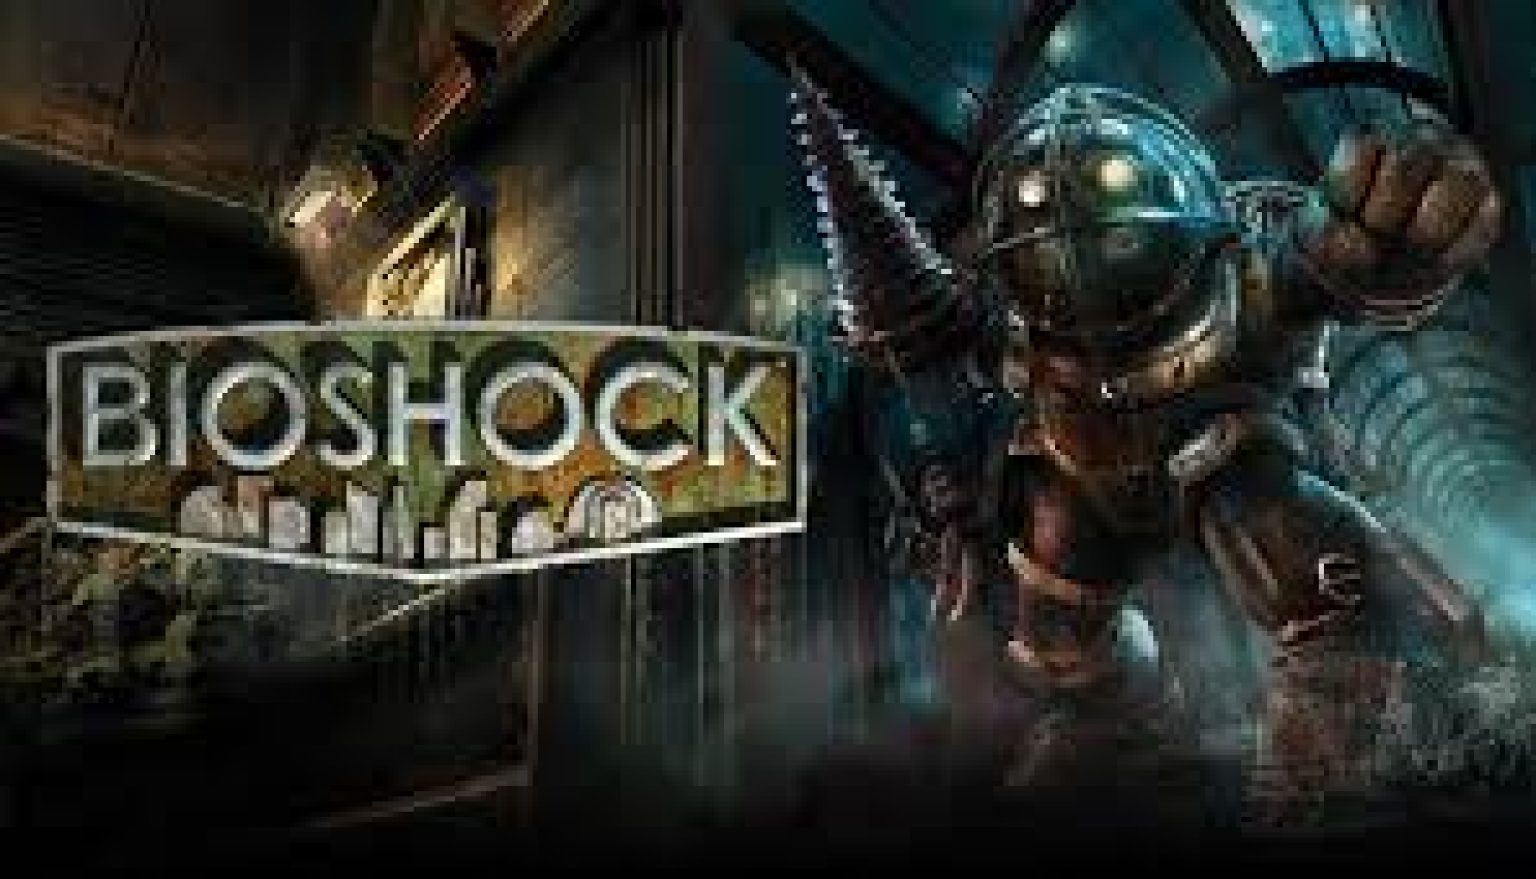 nintendo switch bioshock download free